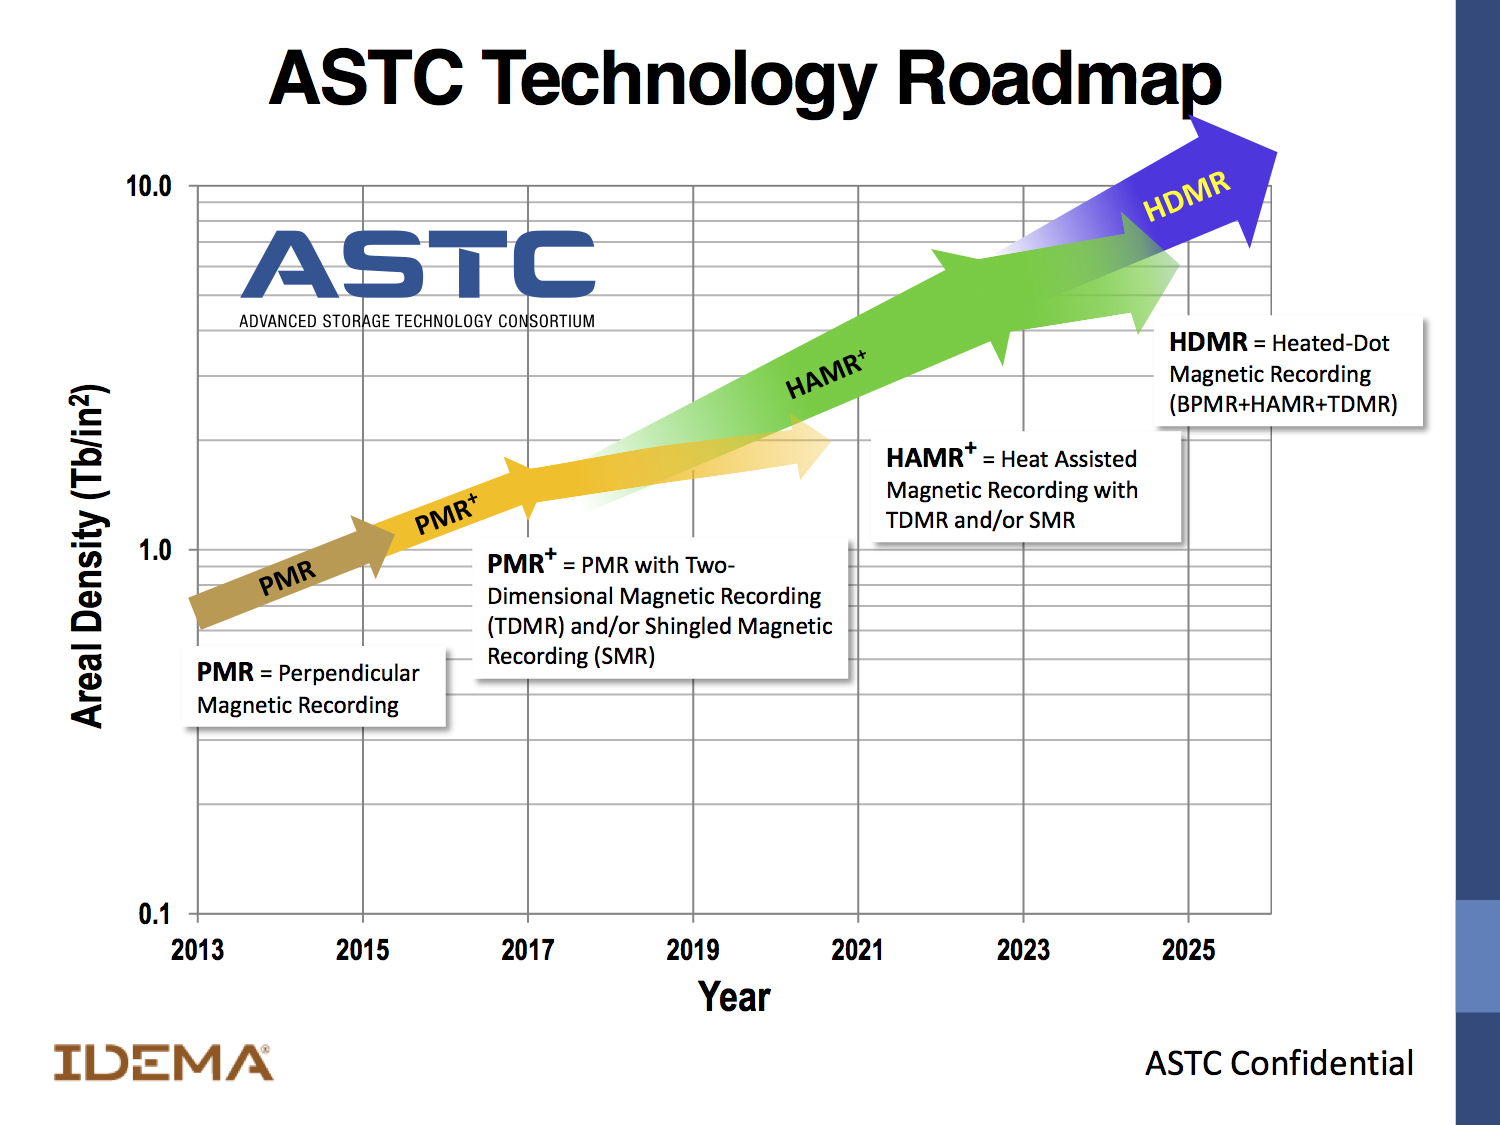 2016 ASTC Technology Roadmap